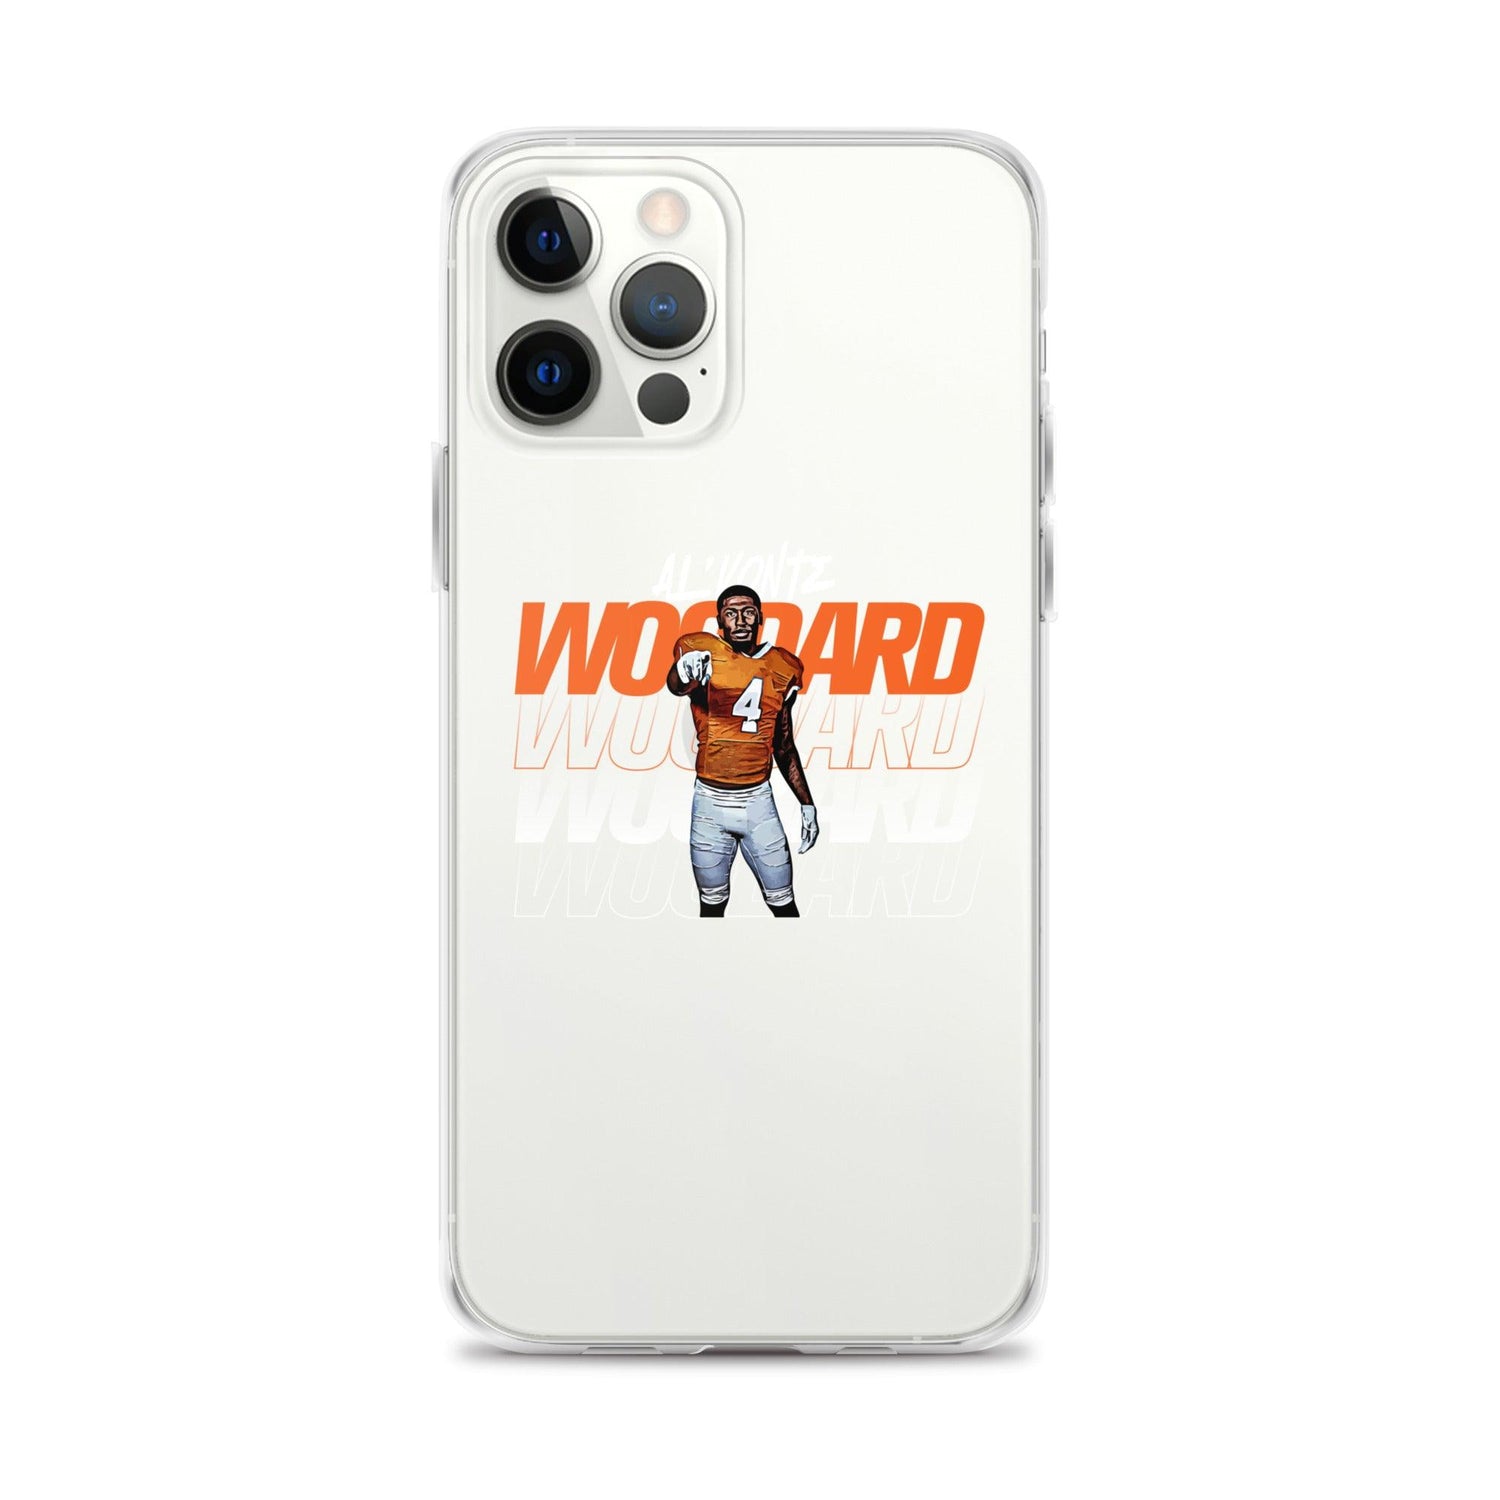 Al’vonte Woodard "Gameday" iPhone Case - Fan Arch